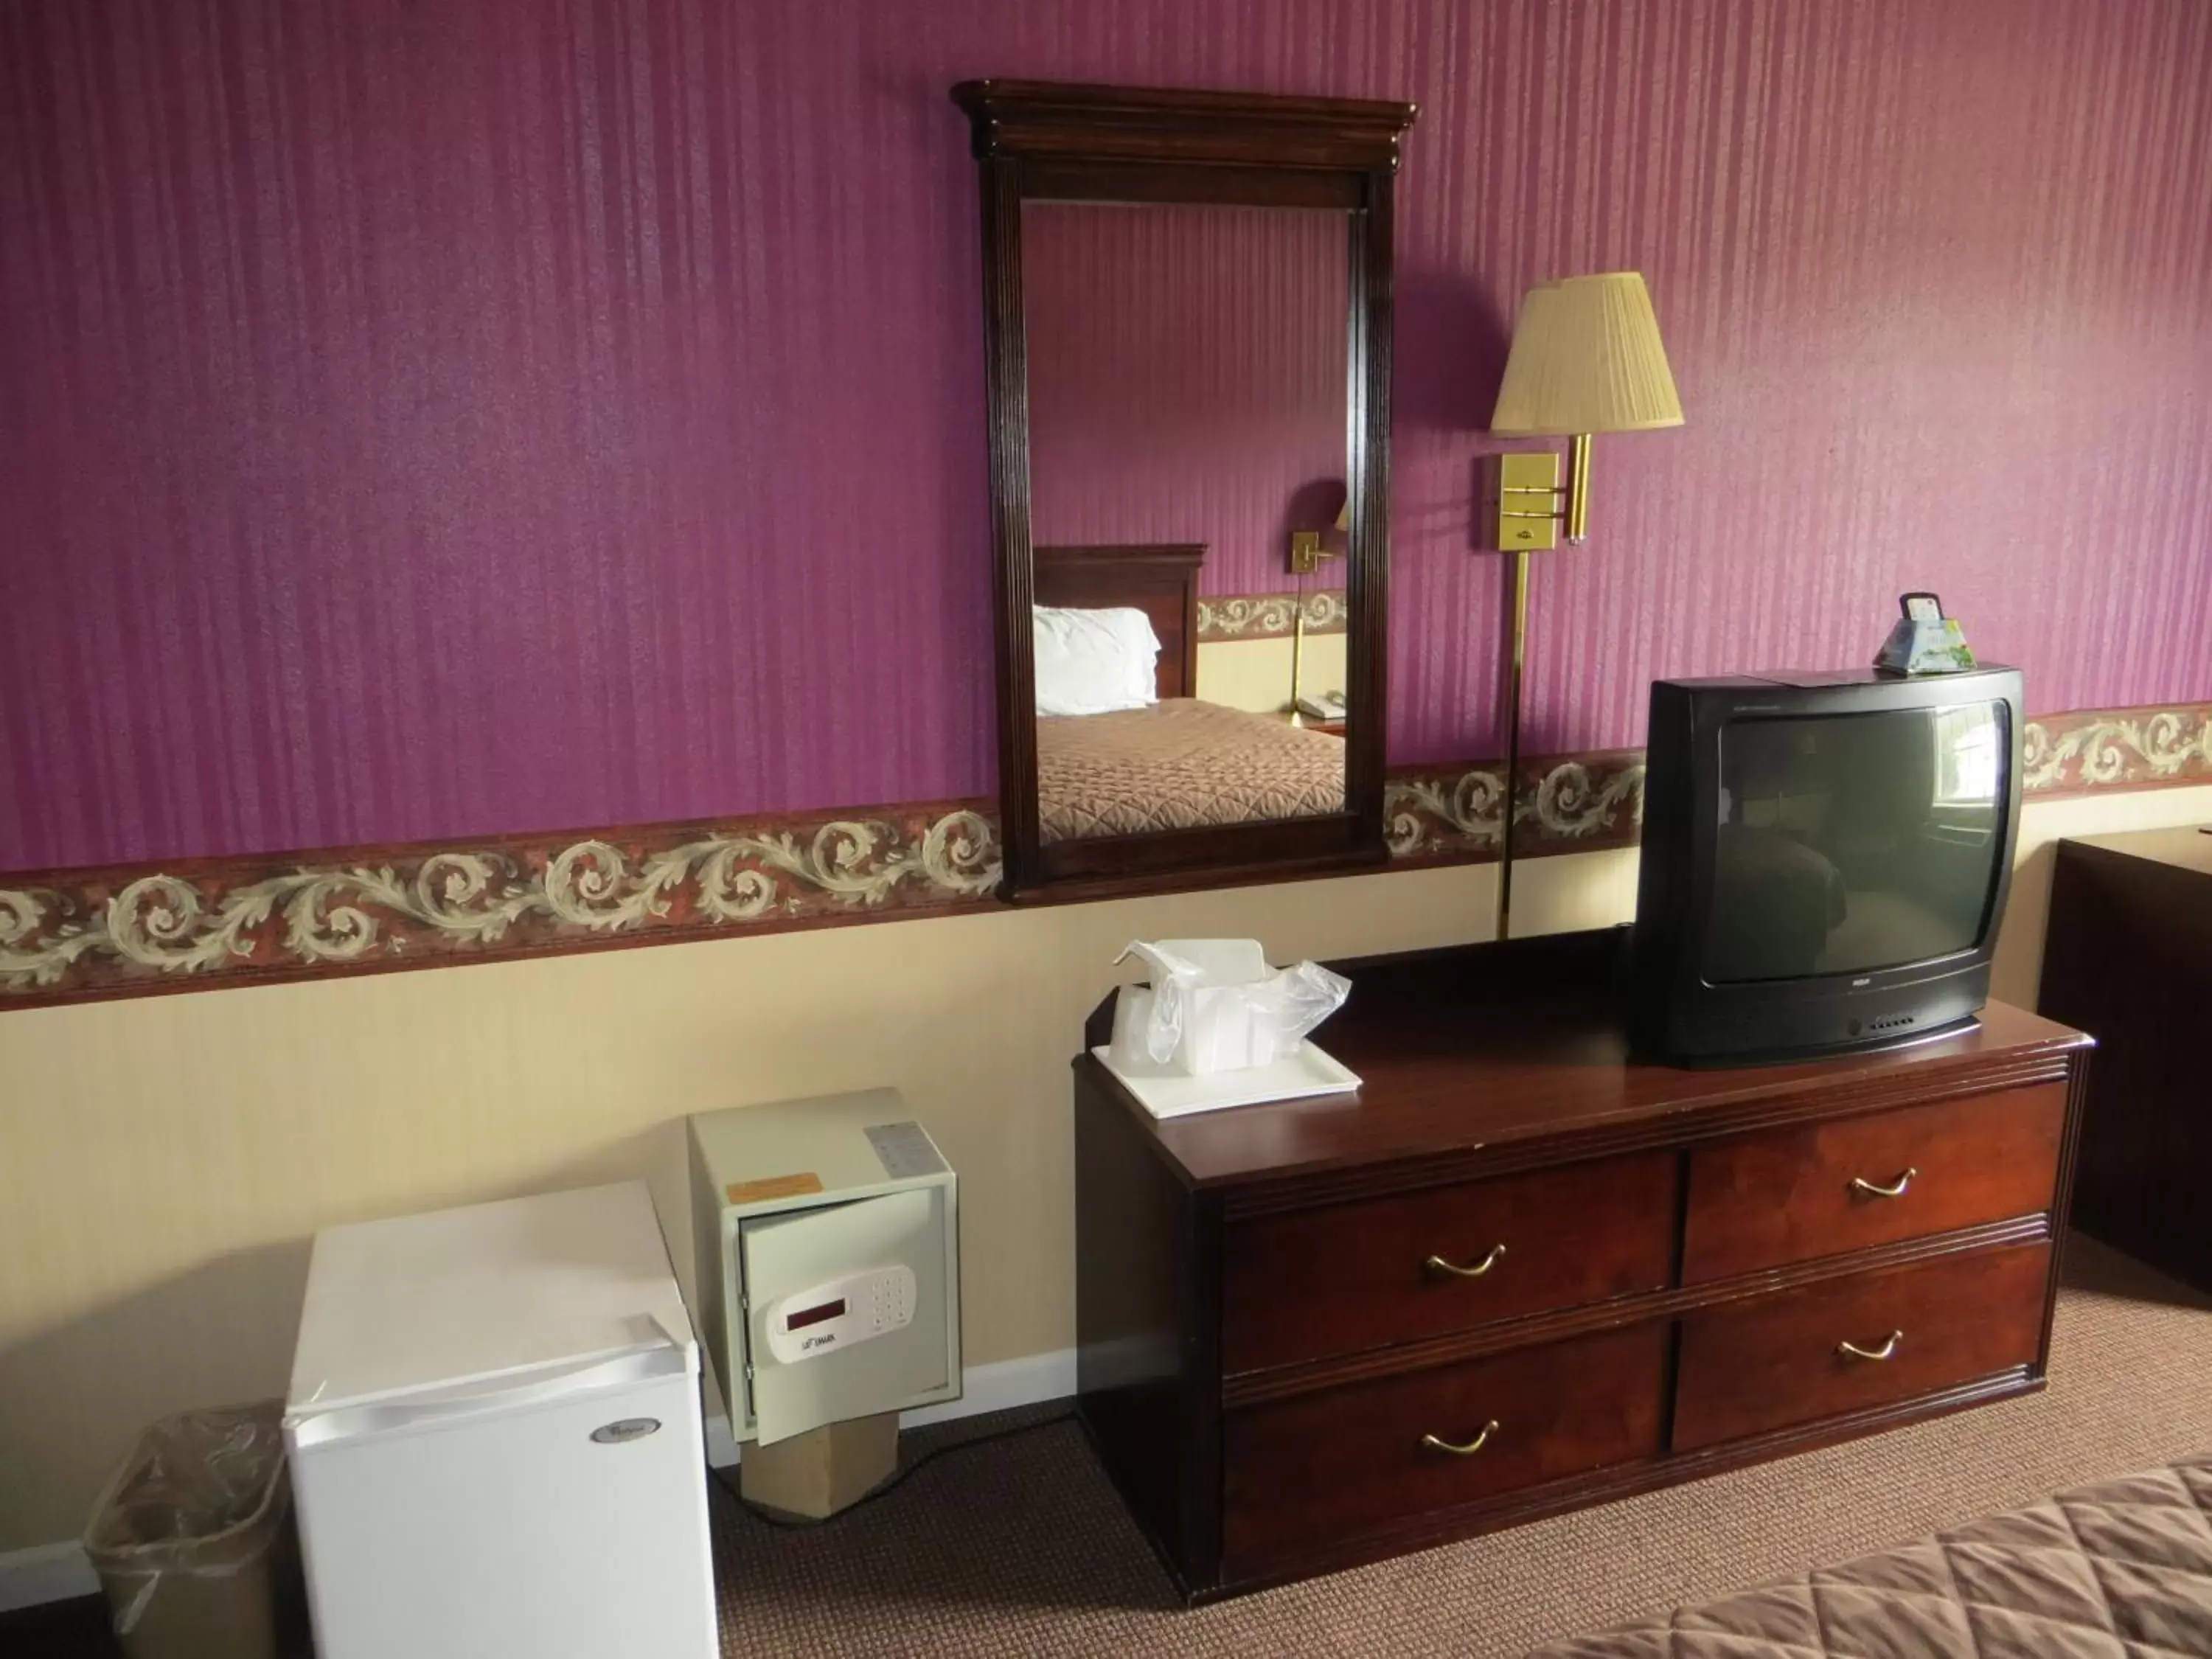 TV and multimedia, Bathroom in Americourt Hotel and Suites - Elizabethton